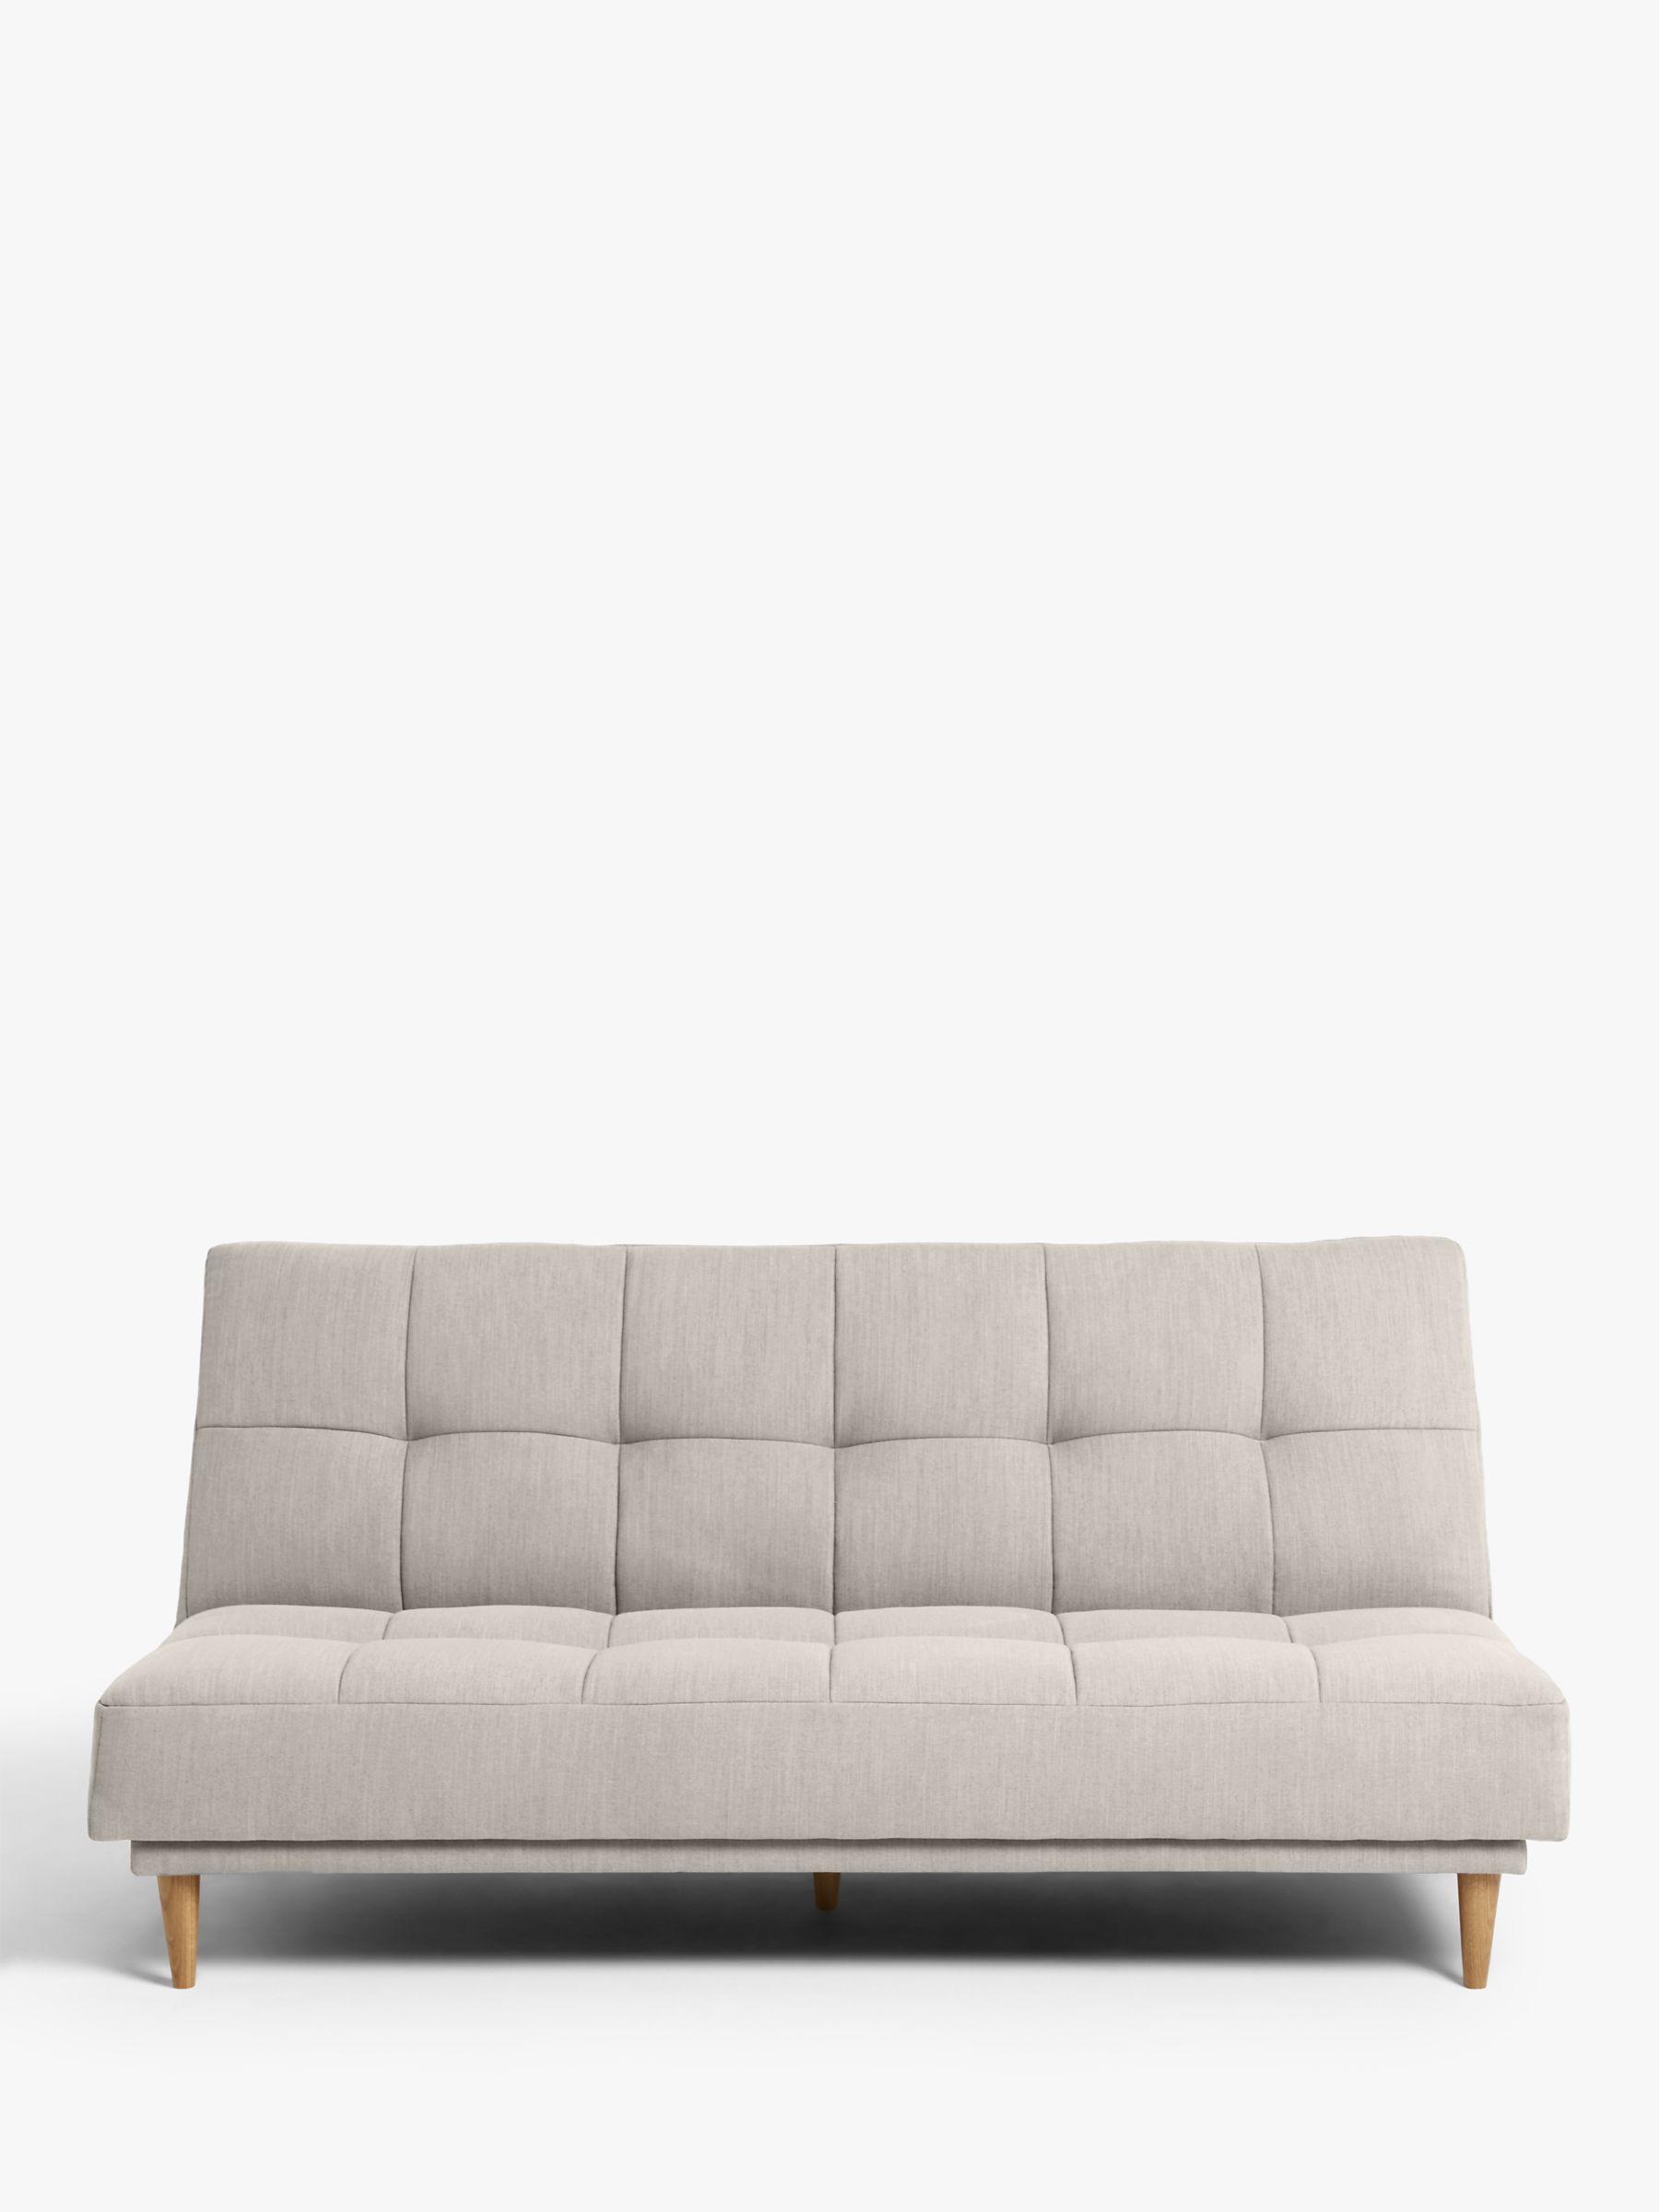 640px x 853px - John Lewis Linear Medium 2 Seater Sofa Bed, Light Leg, Topaz Natural